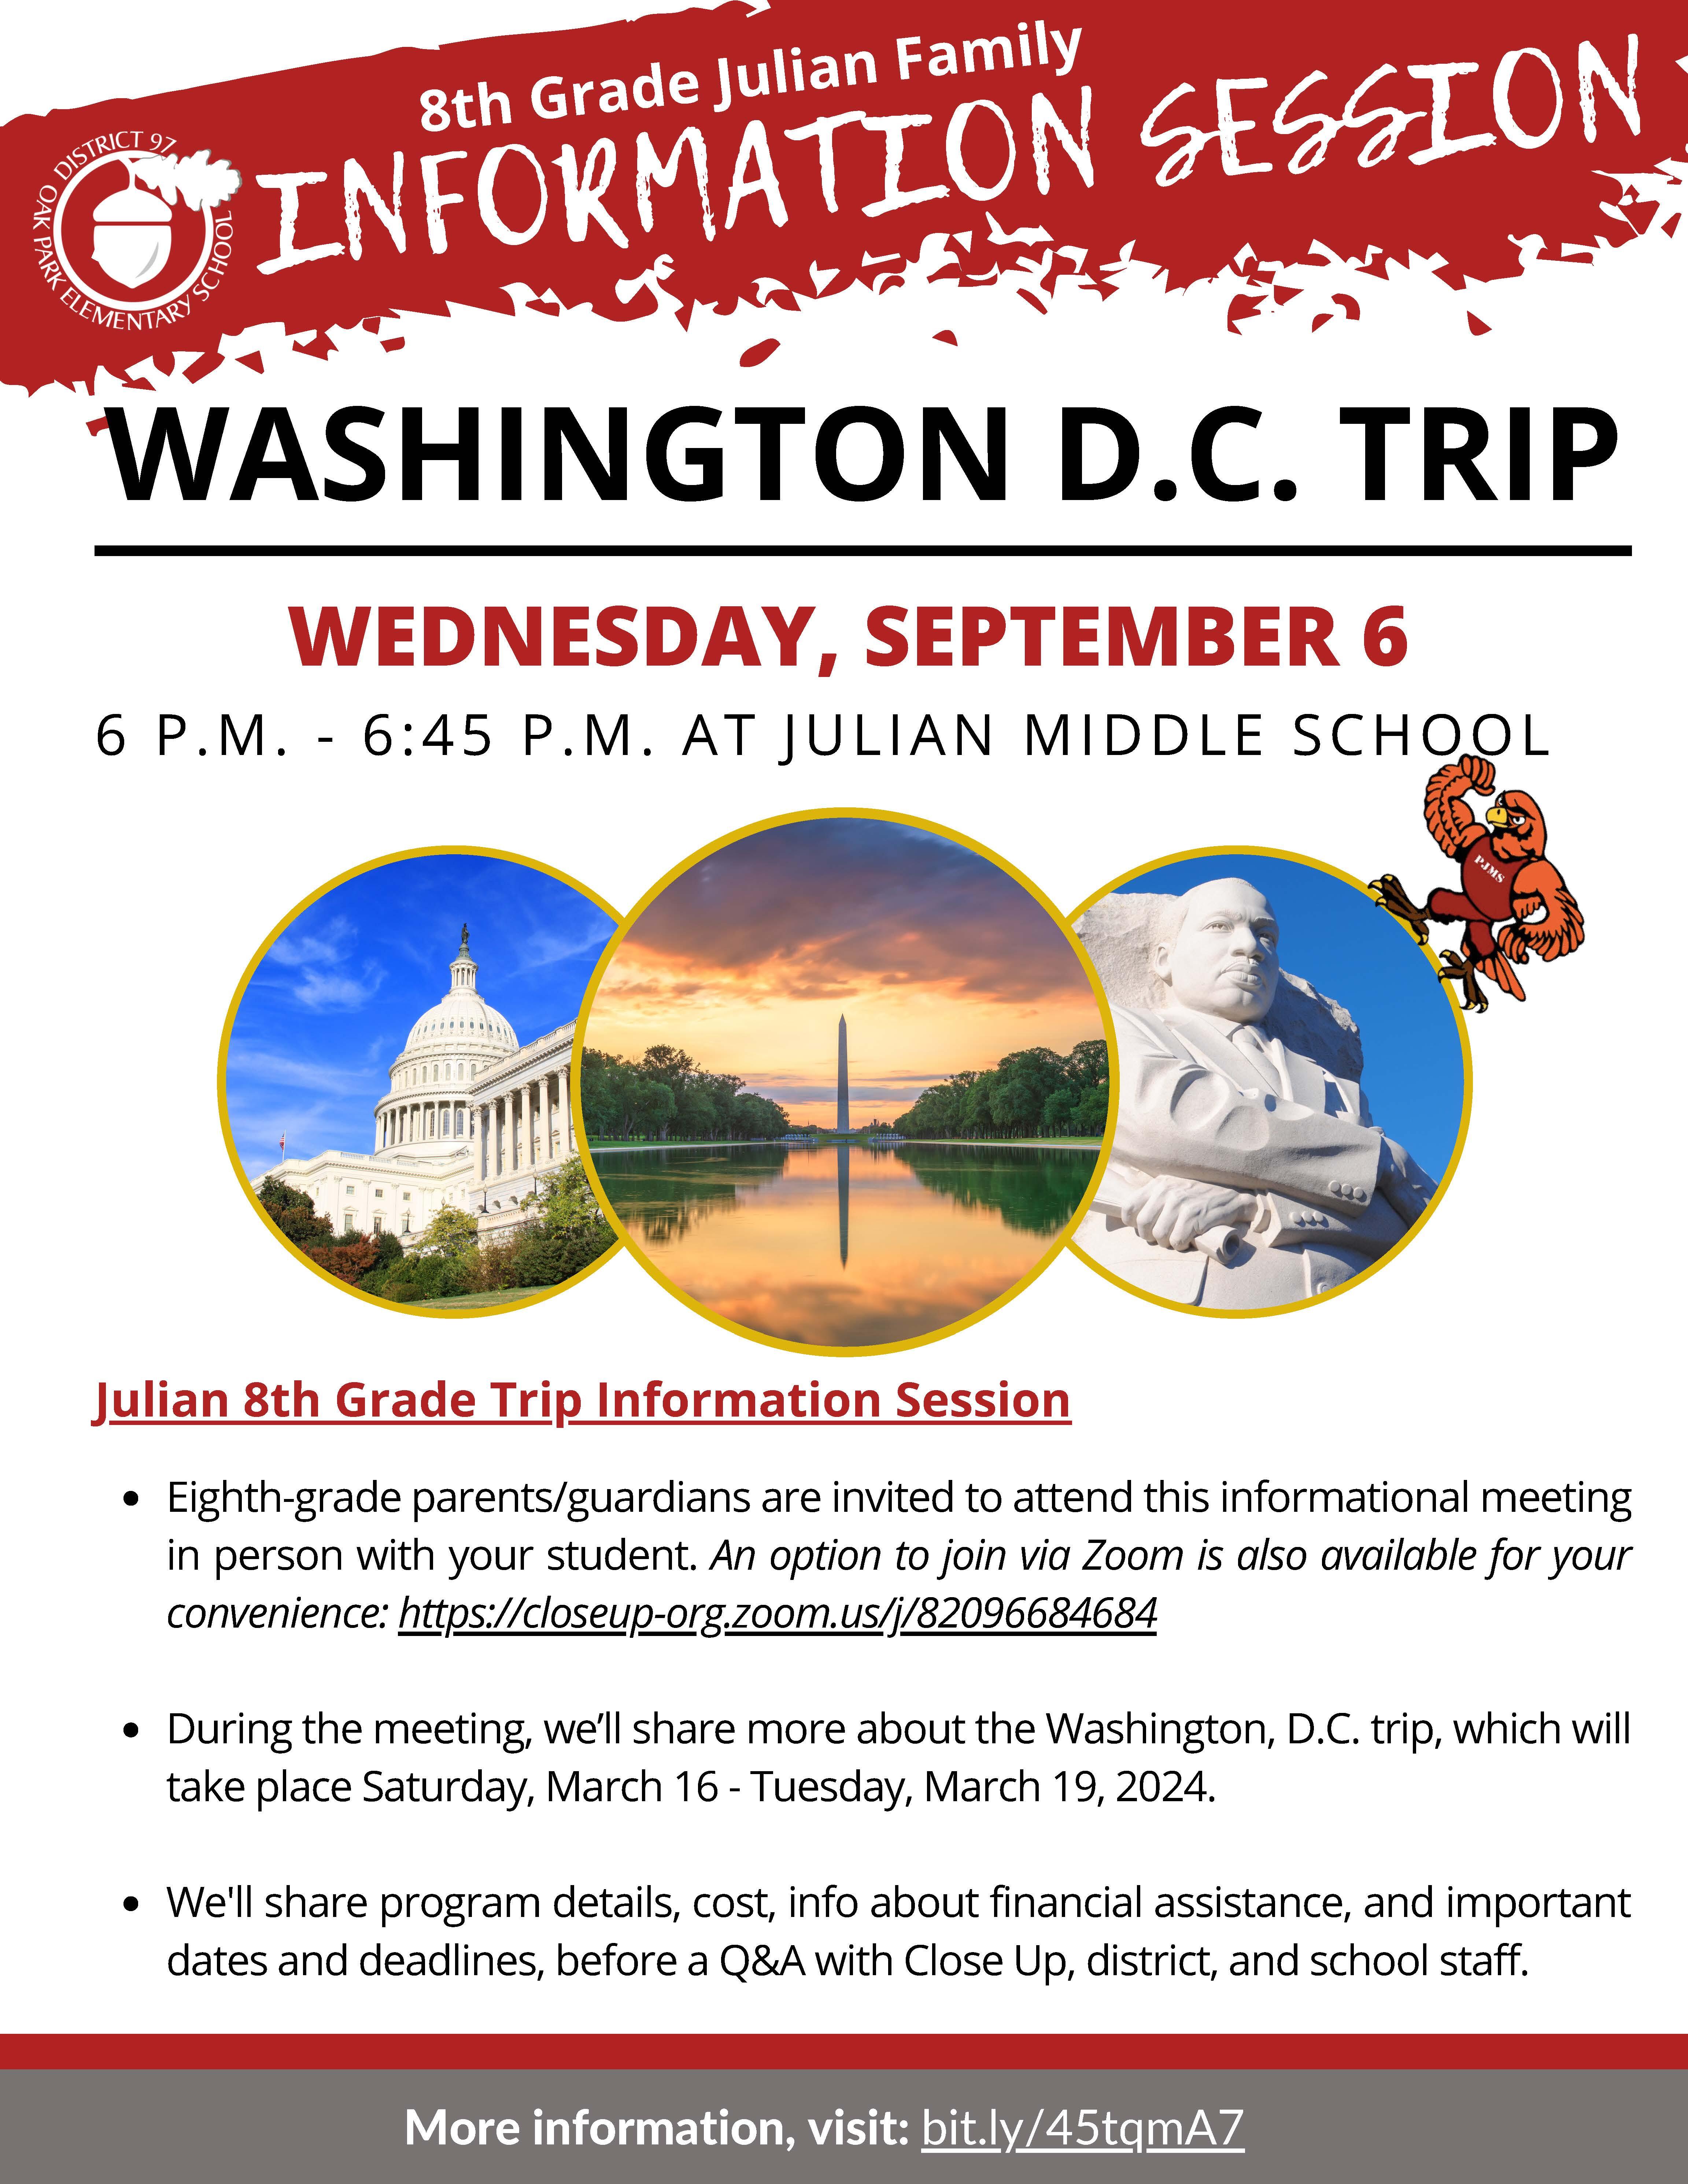 Information flyer for the Washington D.C. Class Trip